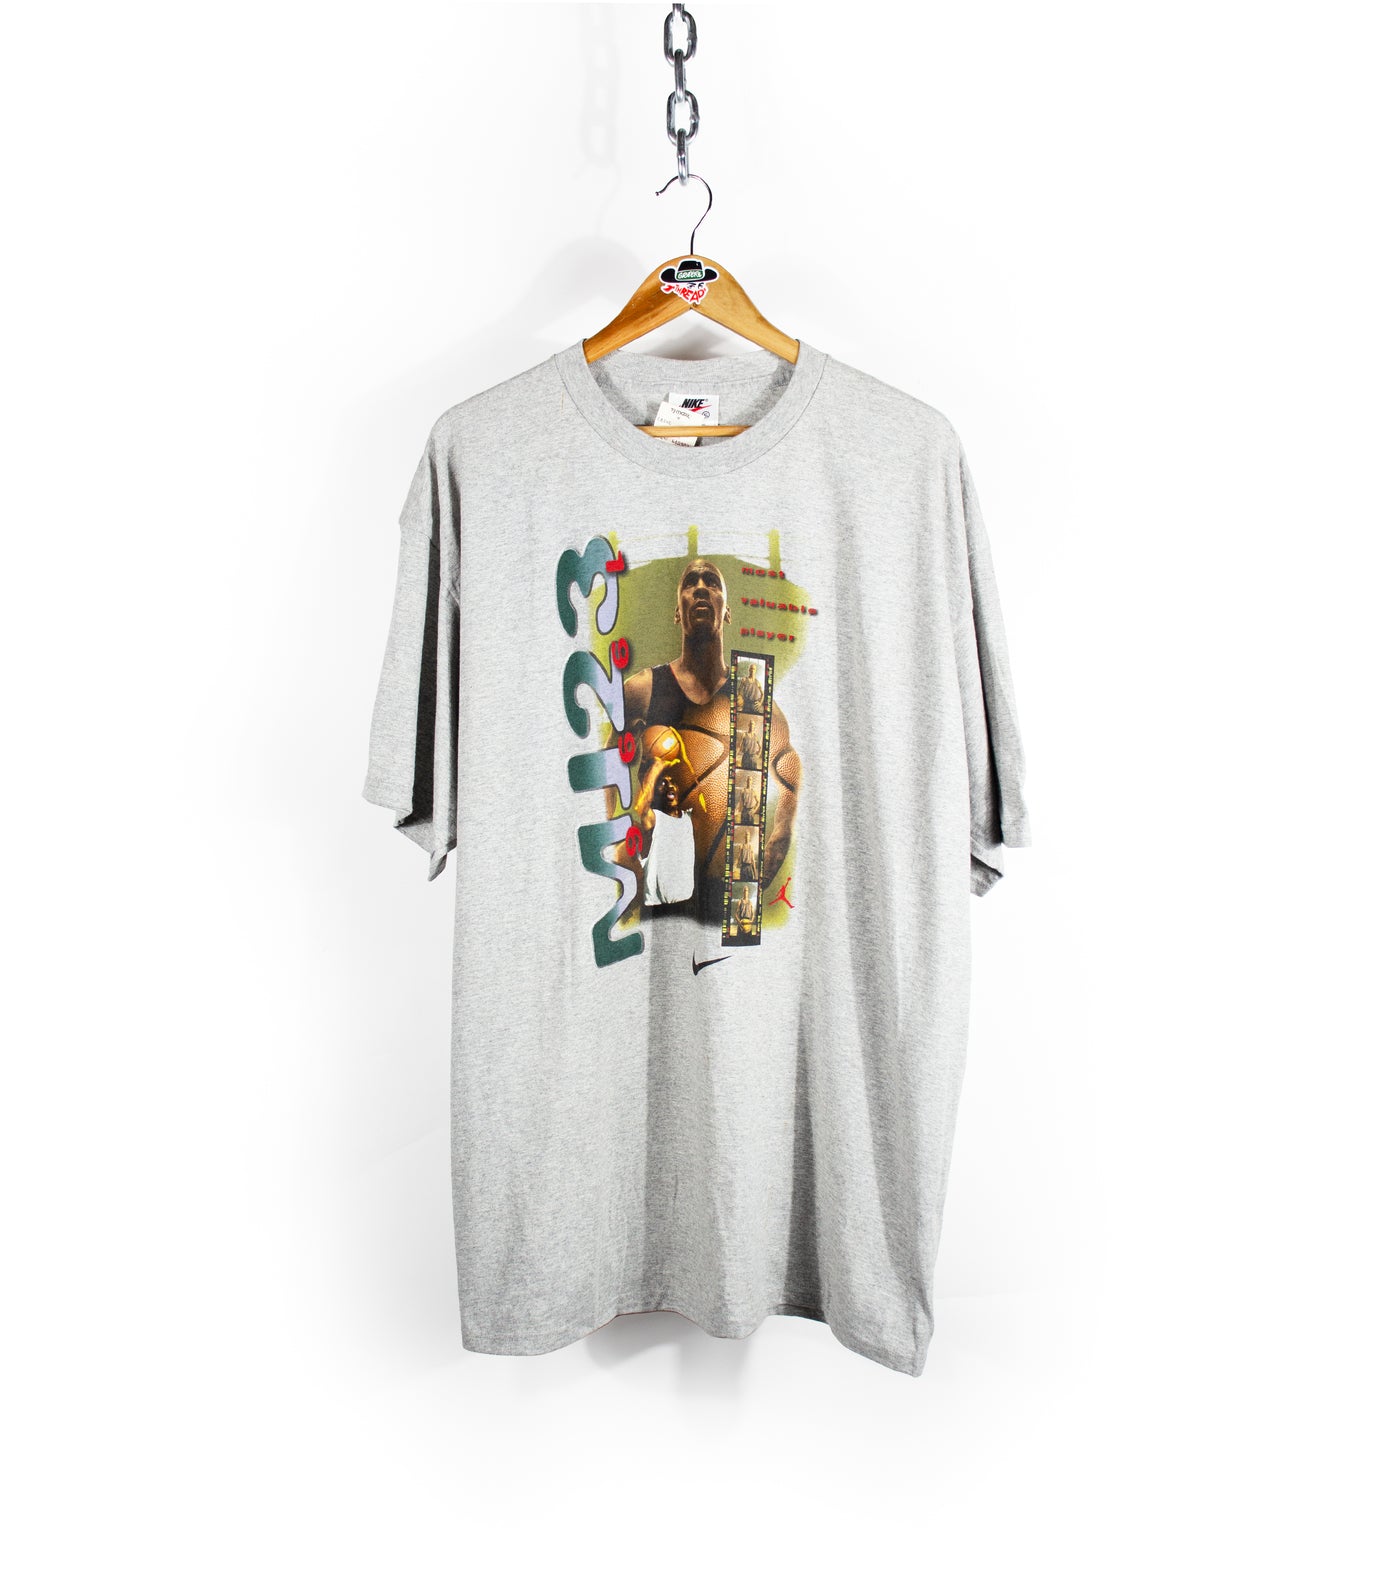 Vintage 1996 Michael Jordan MVP Nike T-Shirt